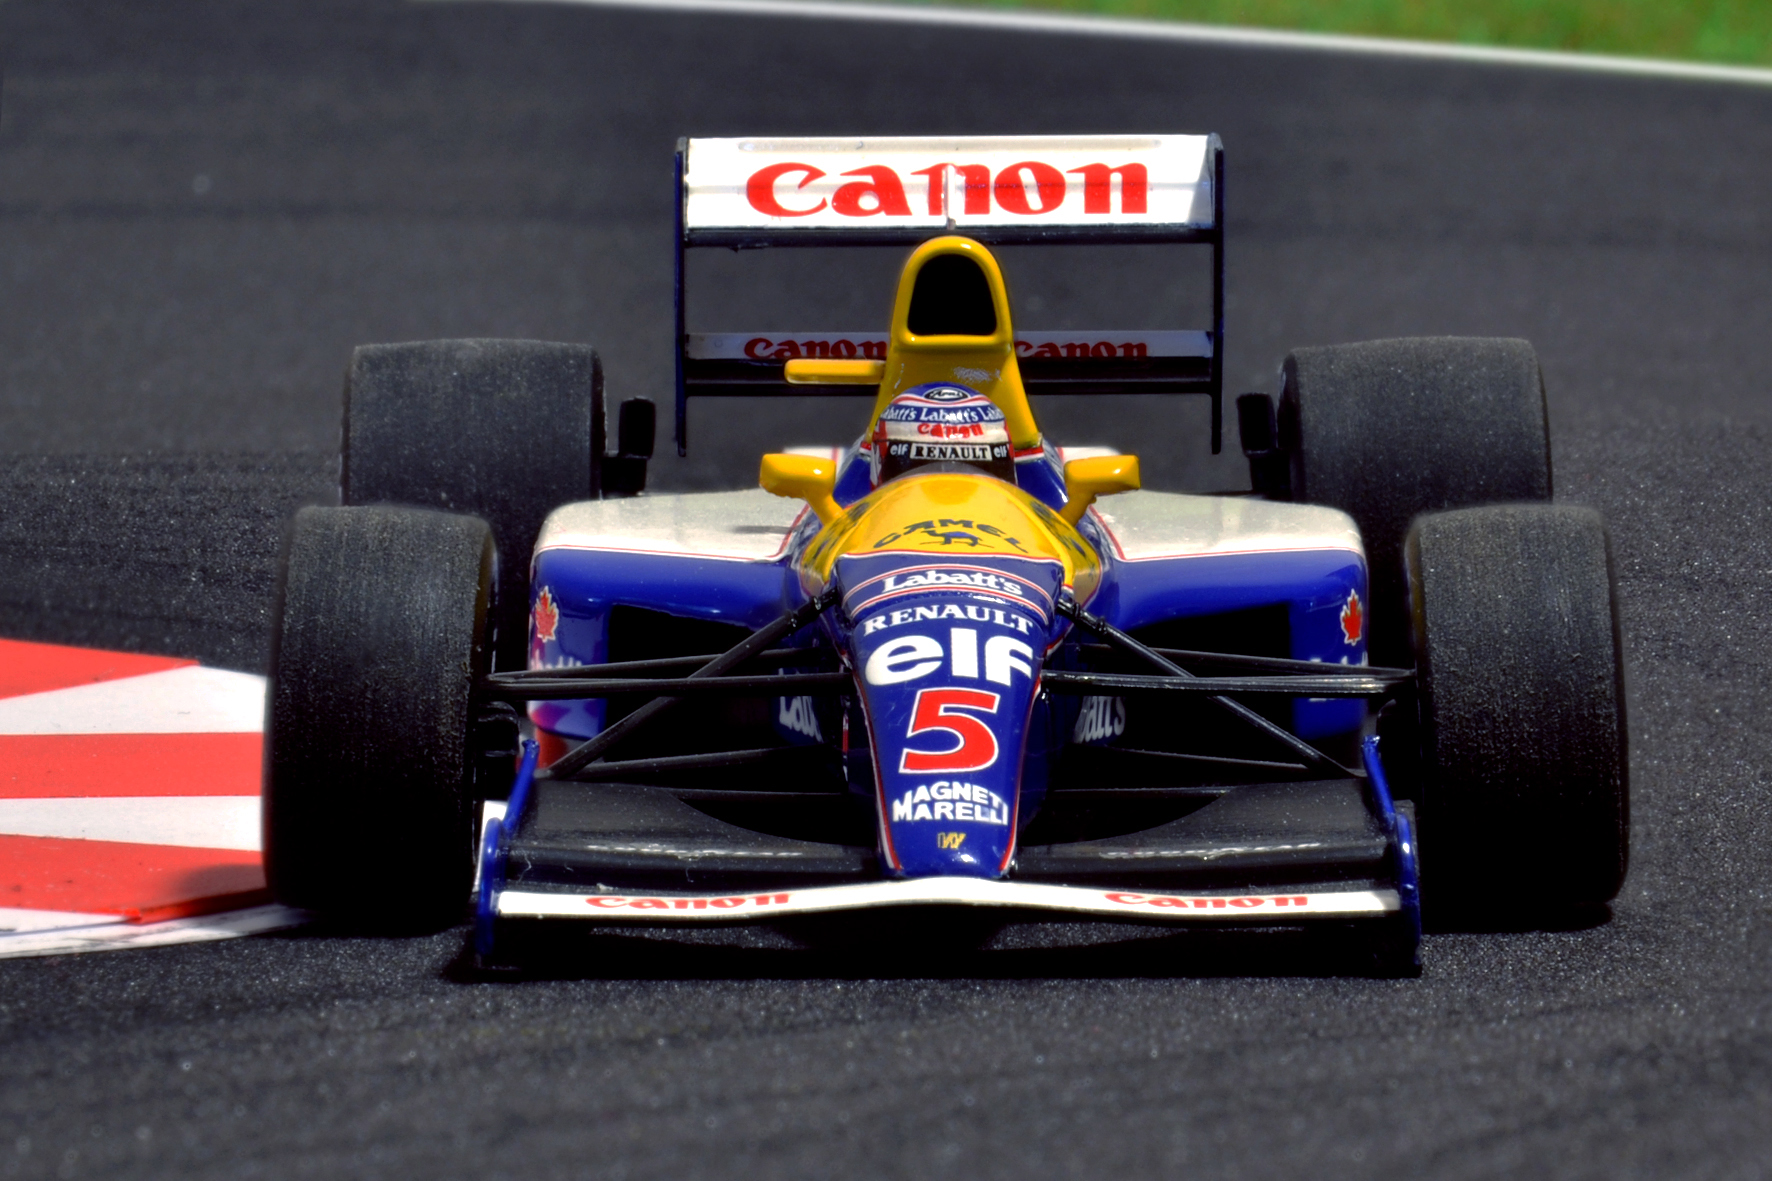 Williams FW14 Nigel Mansell 1991 - Minichamps 1:43